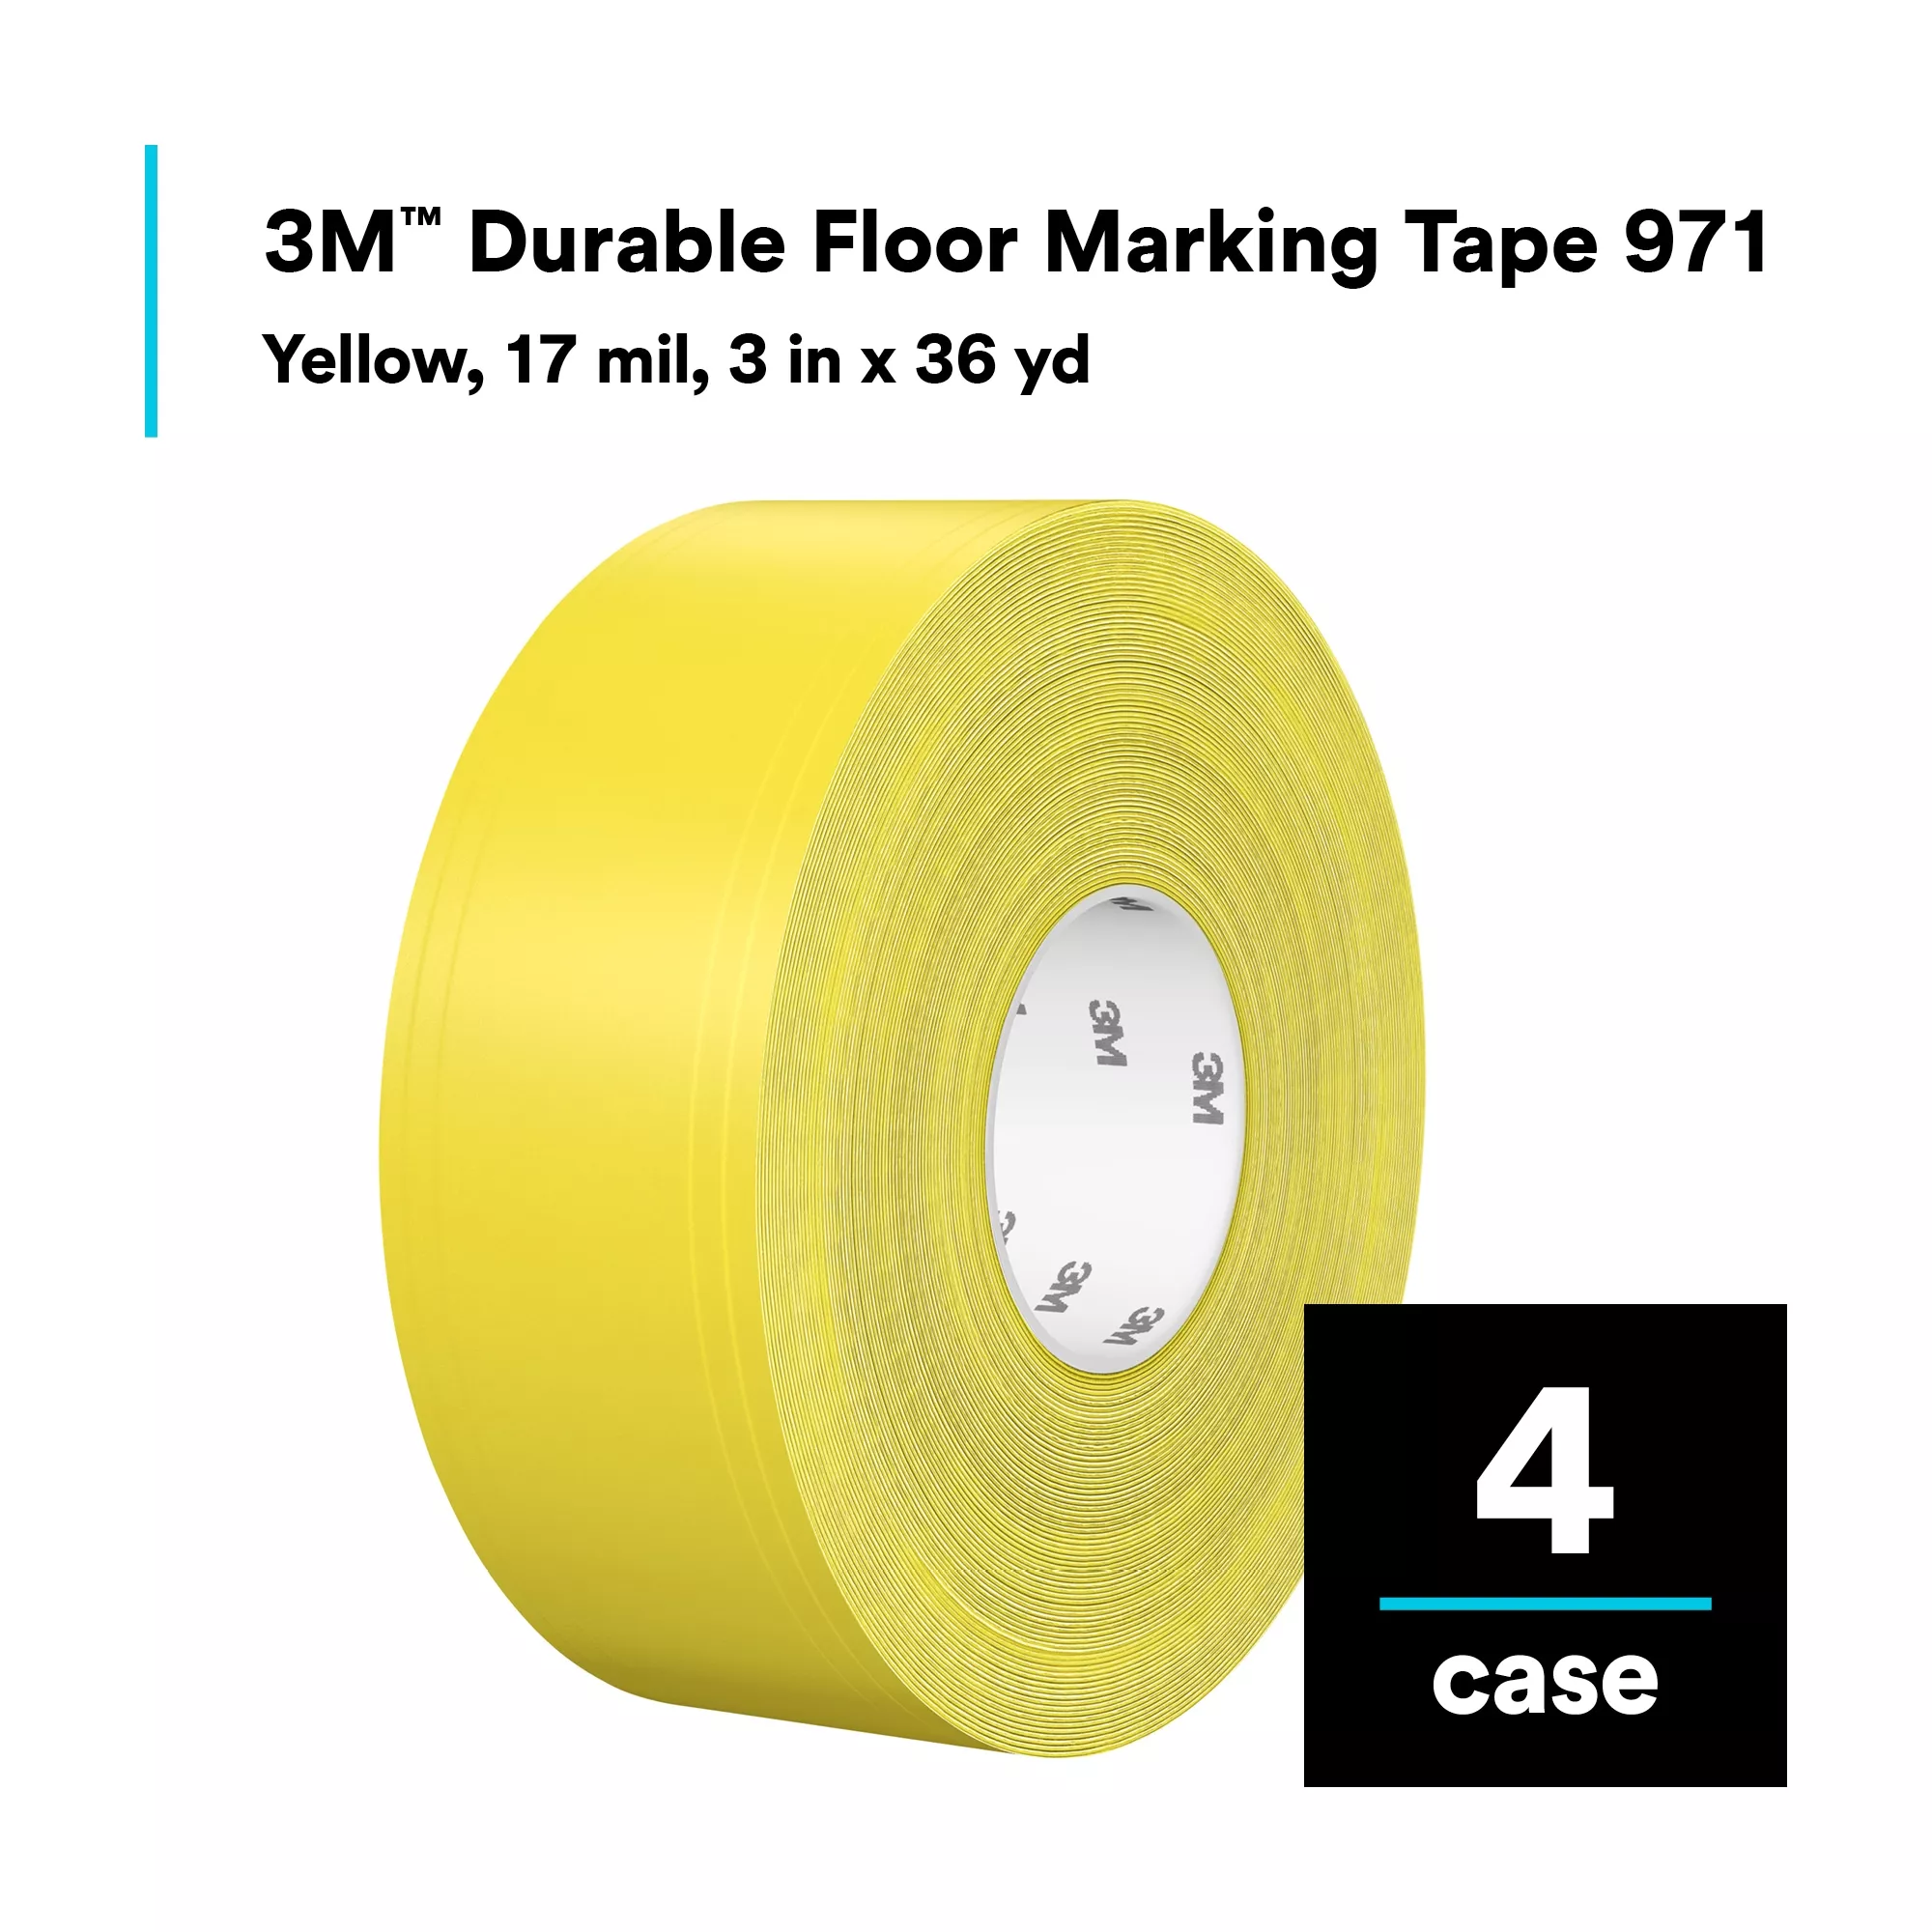 SKU 7100253513 | 3M™ Durable Floor Marking Tape 971